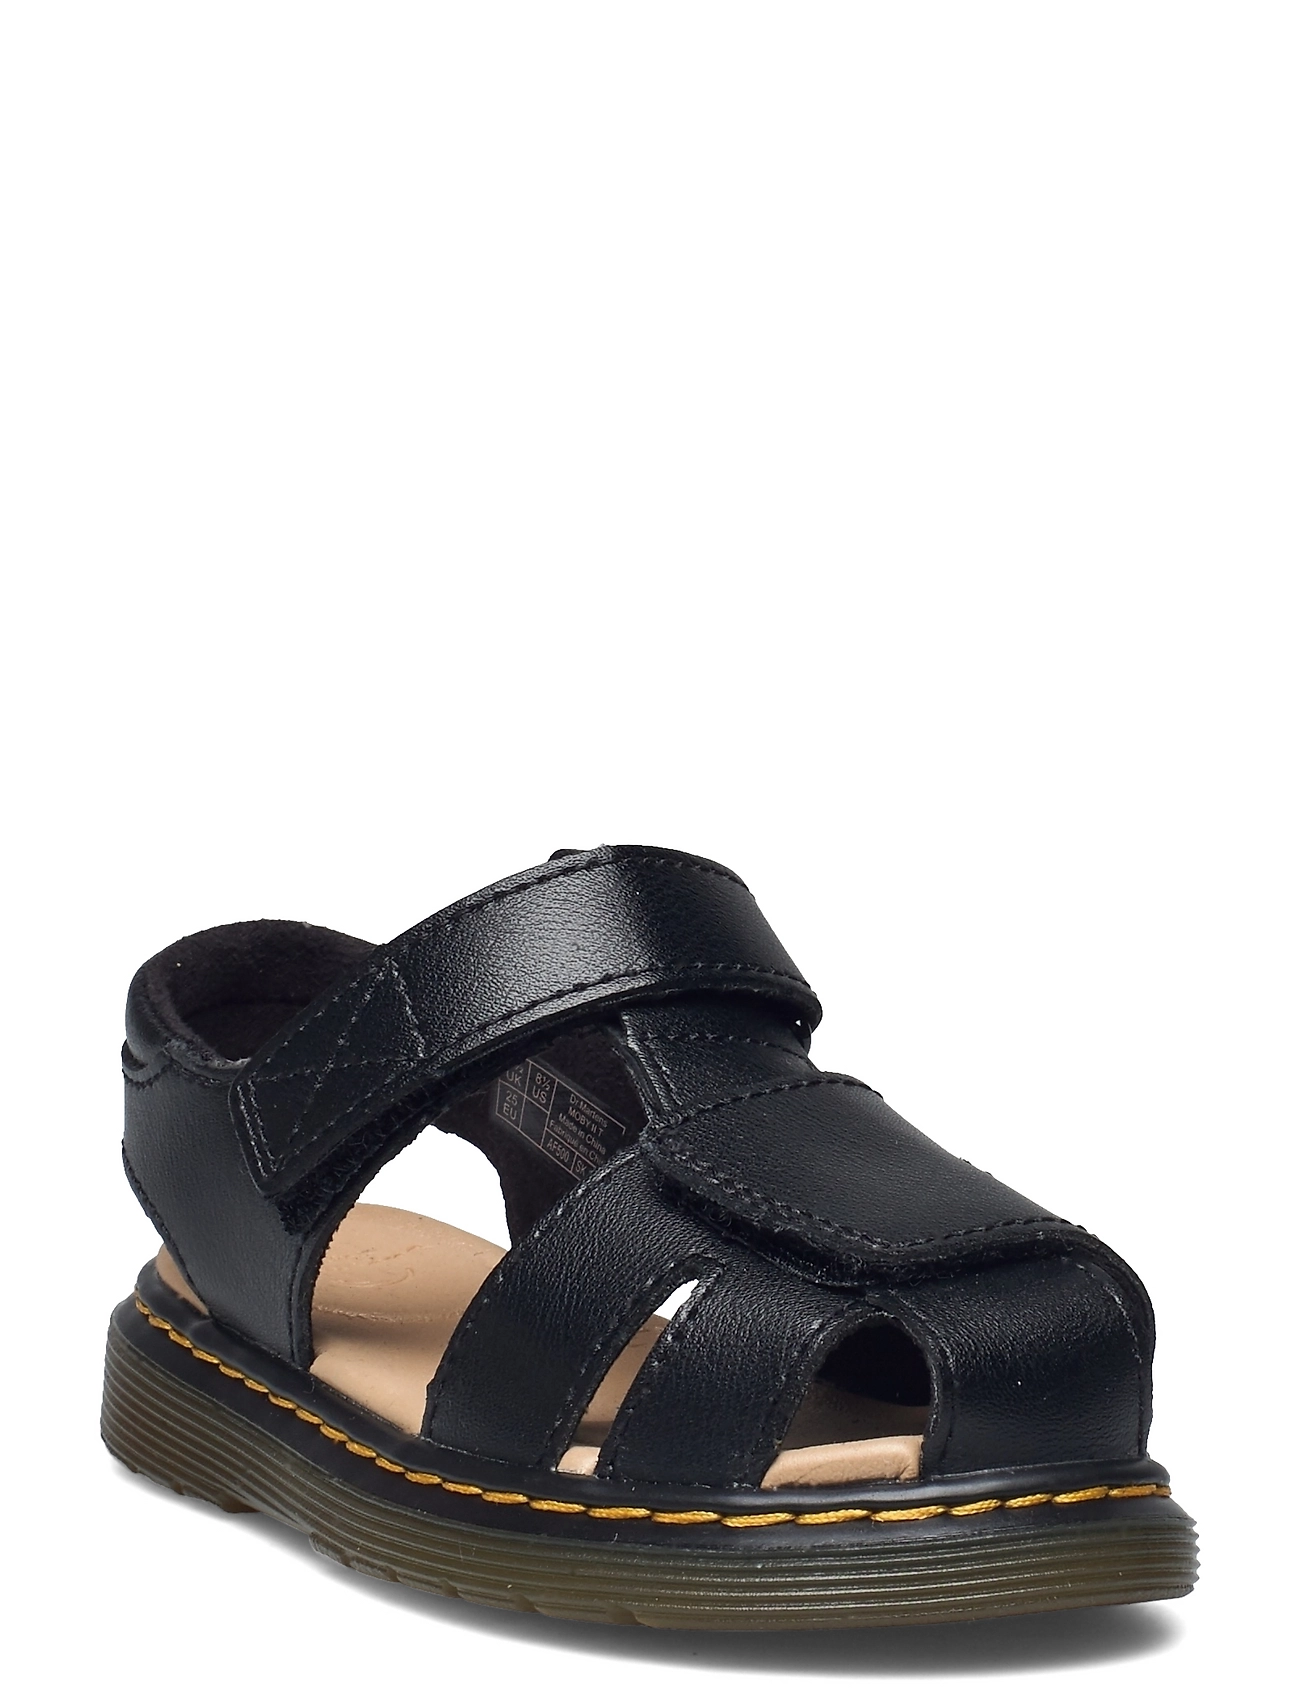 Moby Ii T Black T Lamper Shoes Summer Shoes Sandals Black Dr. Martens